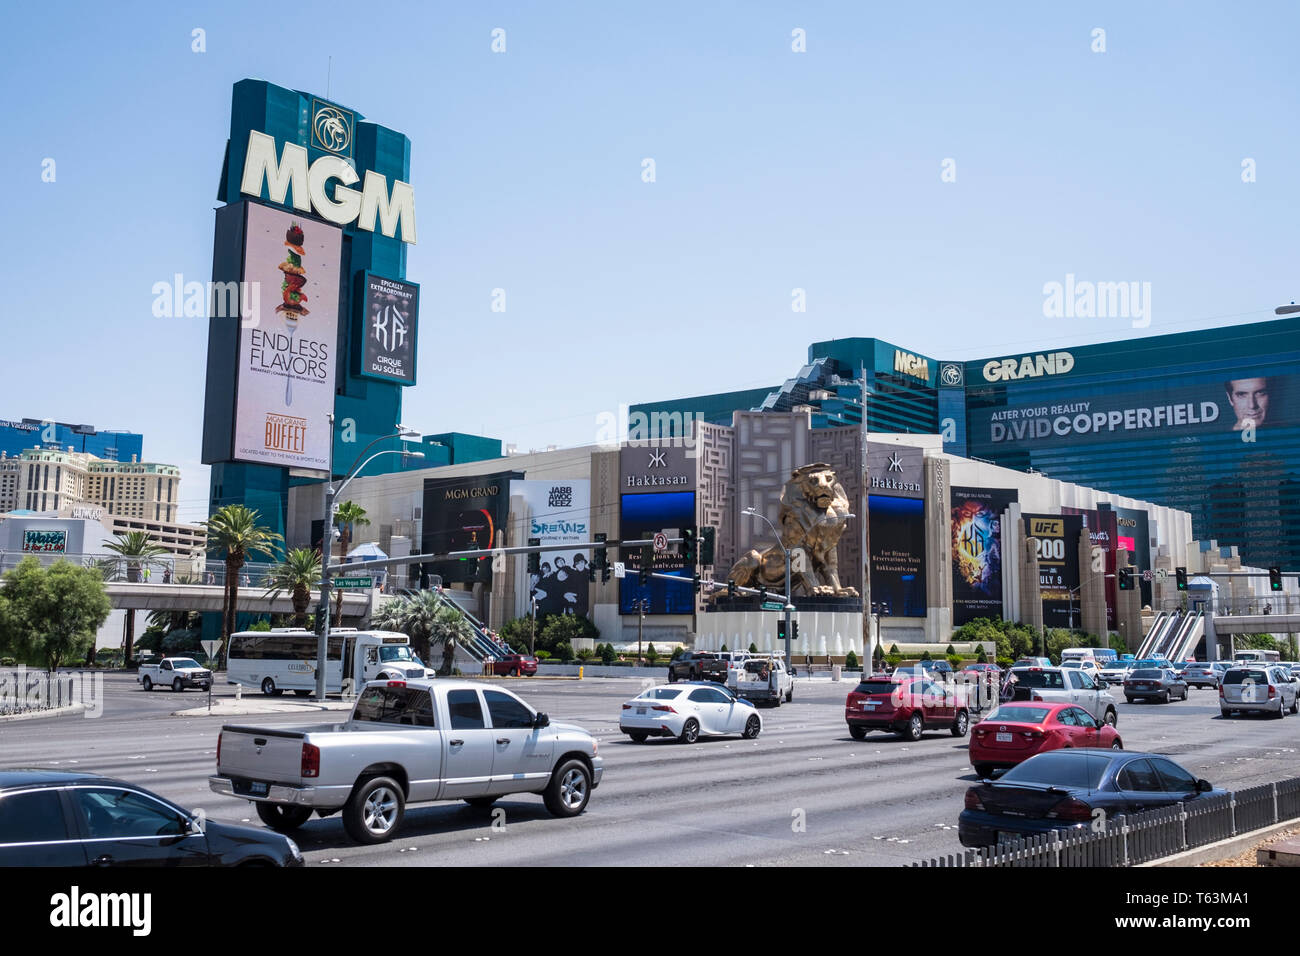 MGM Grand Hotel & Casino on Las Vegas strip, Nevada, USA Stock Photo